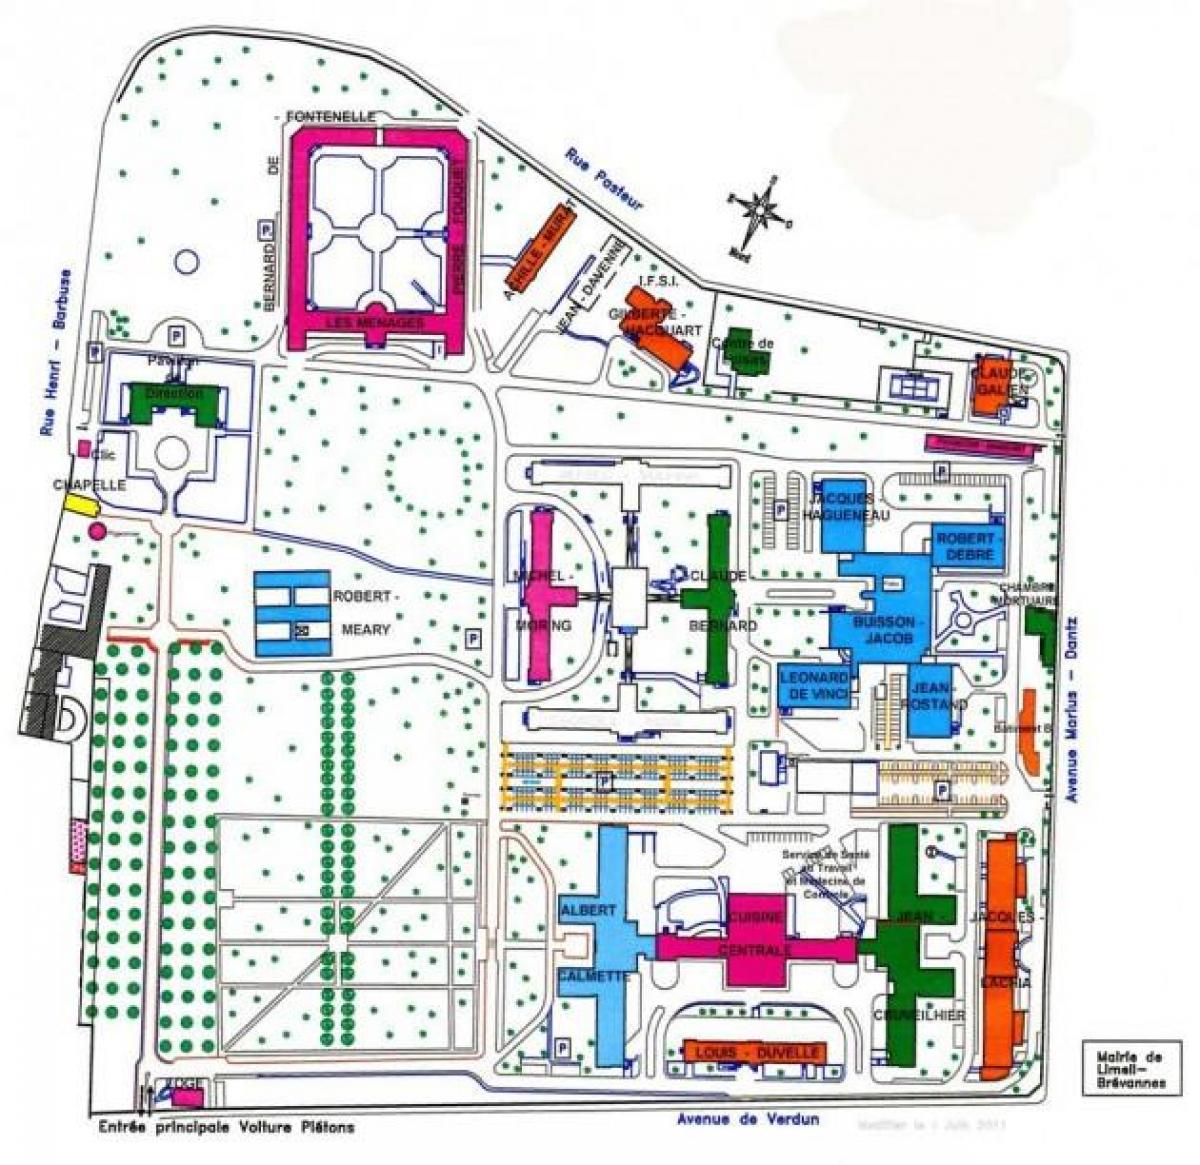 Zemljevid Emile-Roux bolnišnici